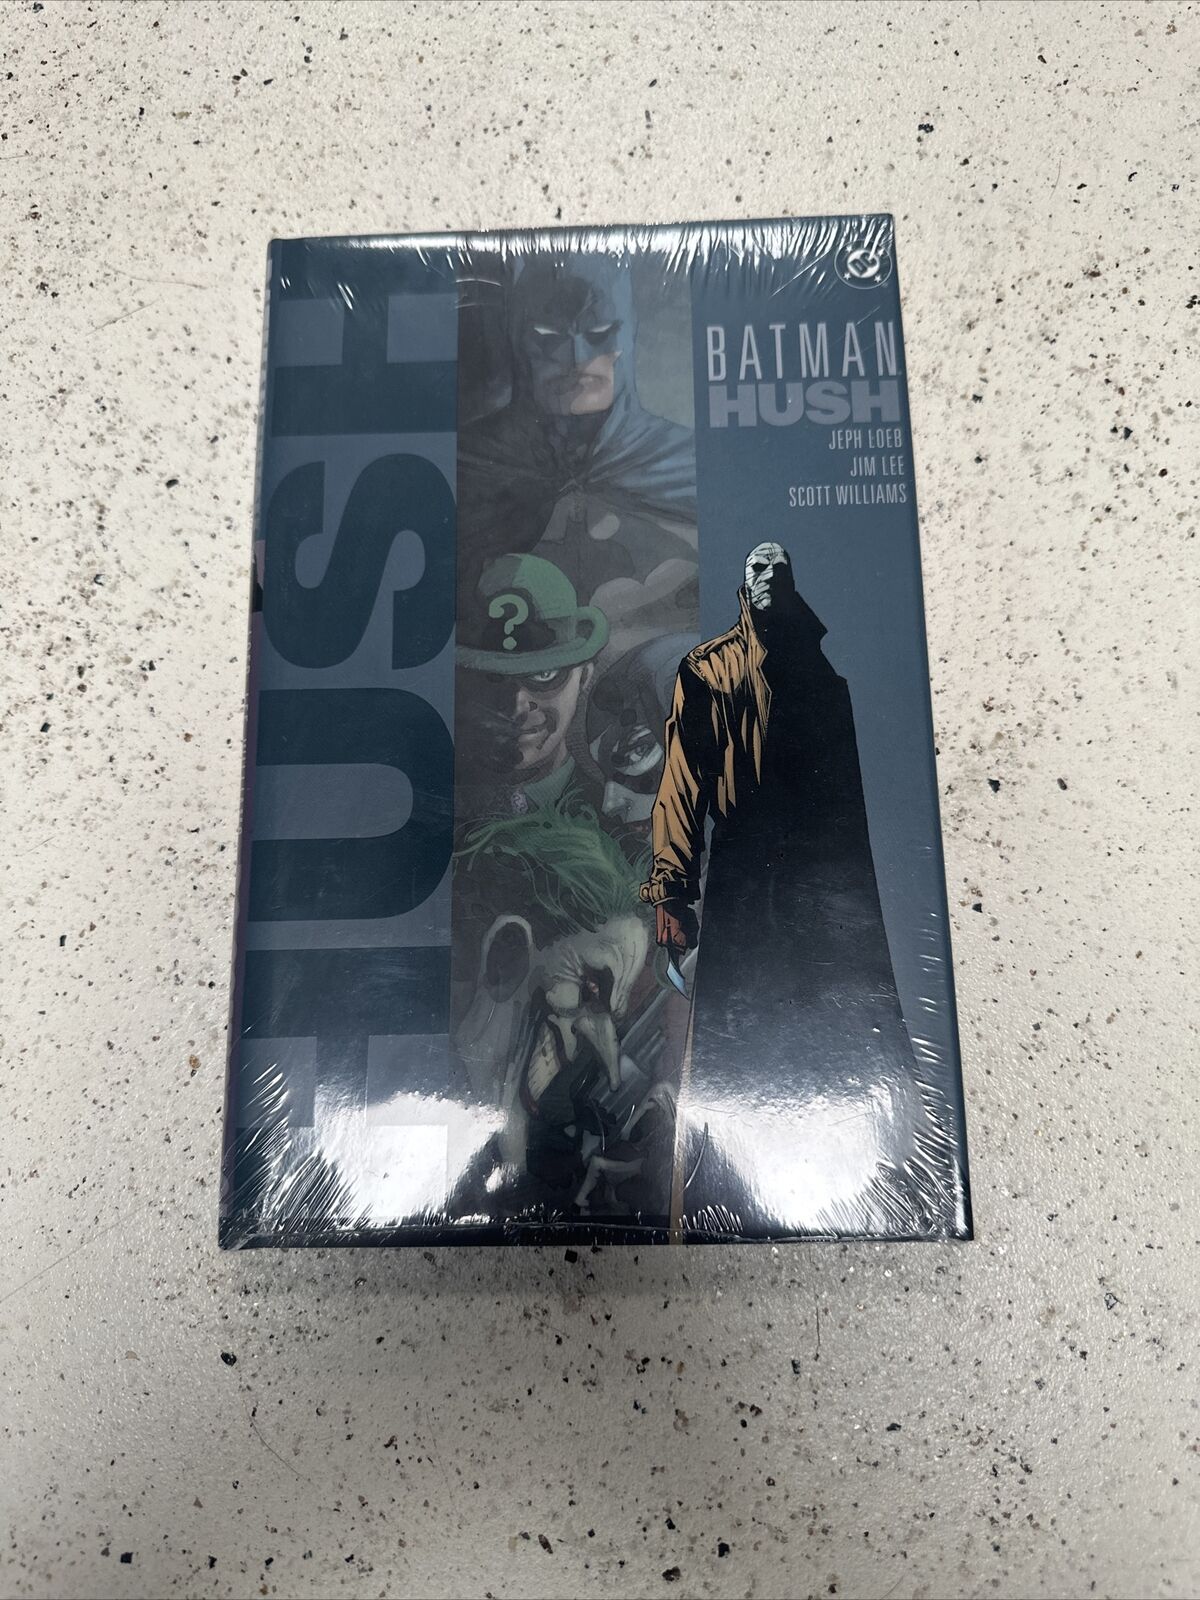 Batman Hush Vol 2 Hardcover DC 2003 Jeph Loeb & Jim Lee NEW Factory SEALED